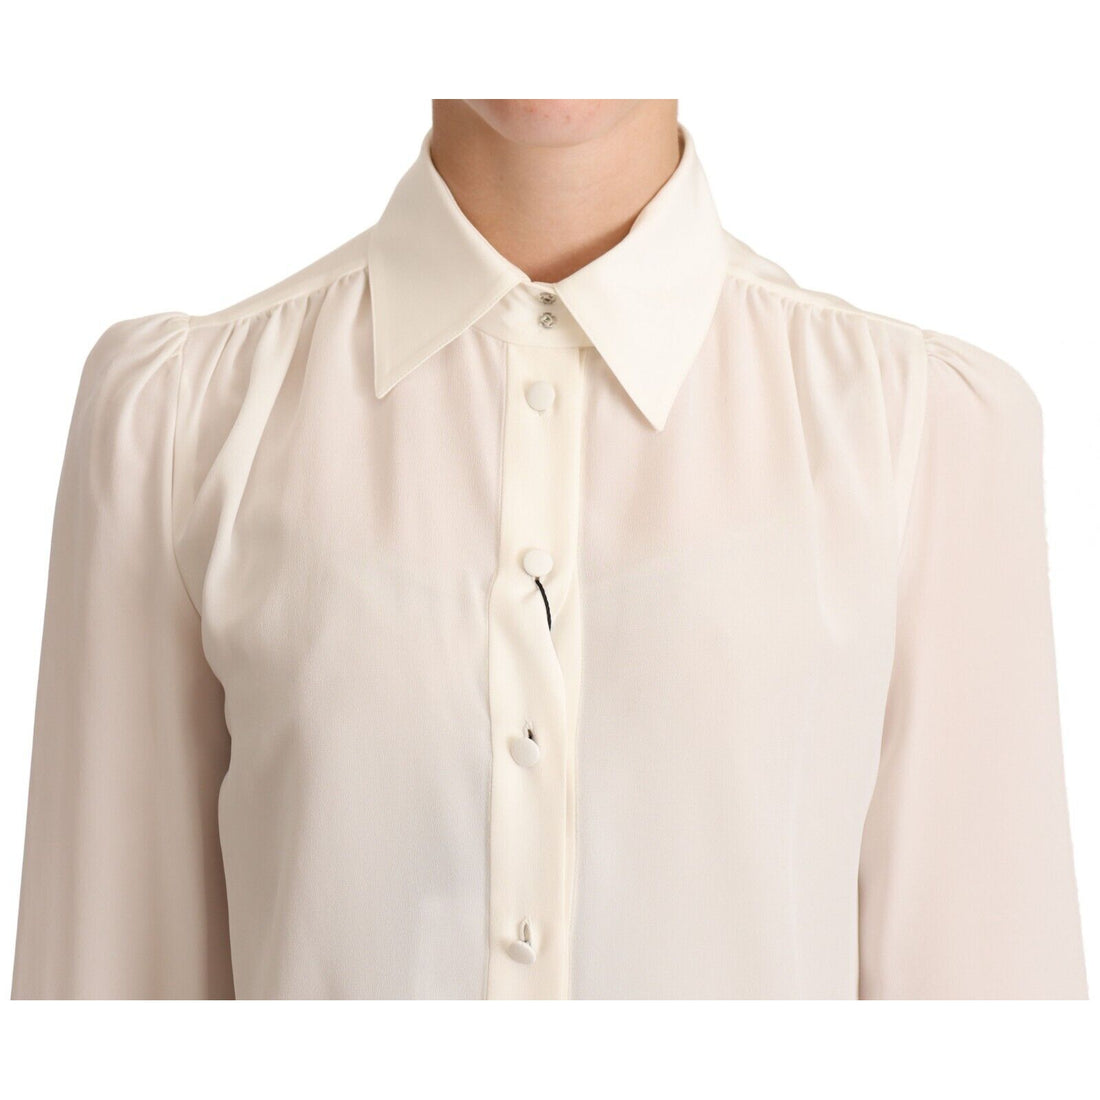 Dolce & Gabbana White Long Sleeve Polo Shirt Top Blouse